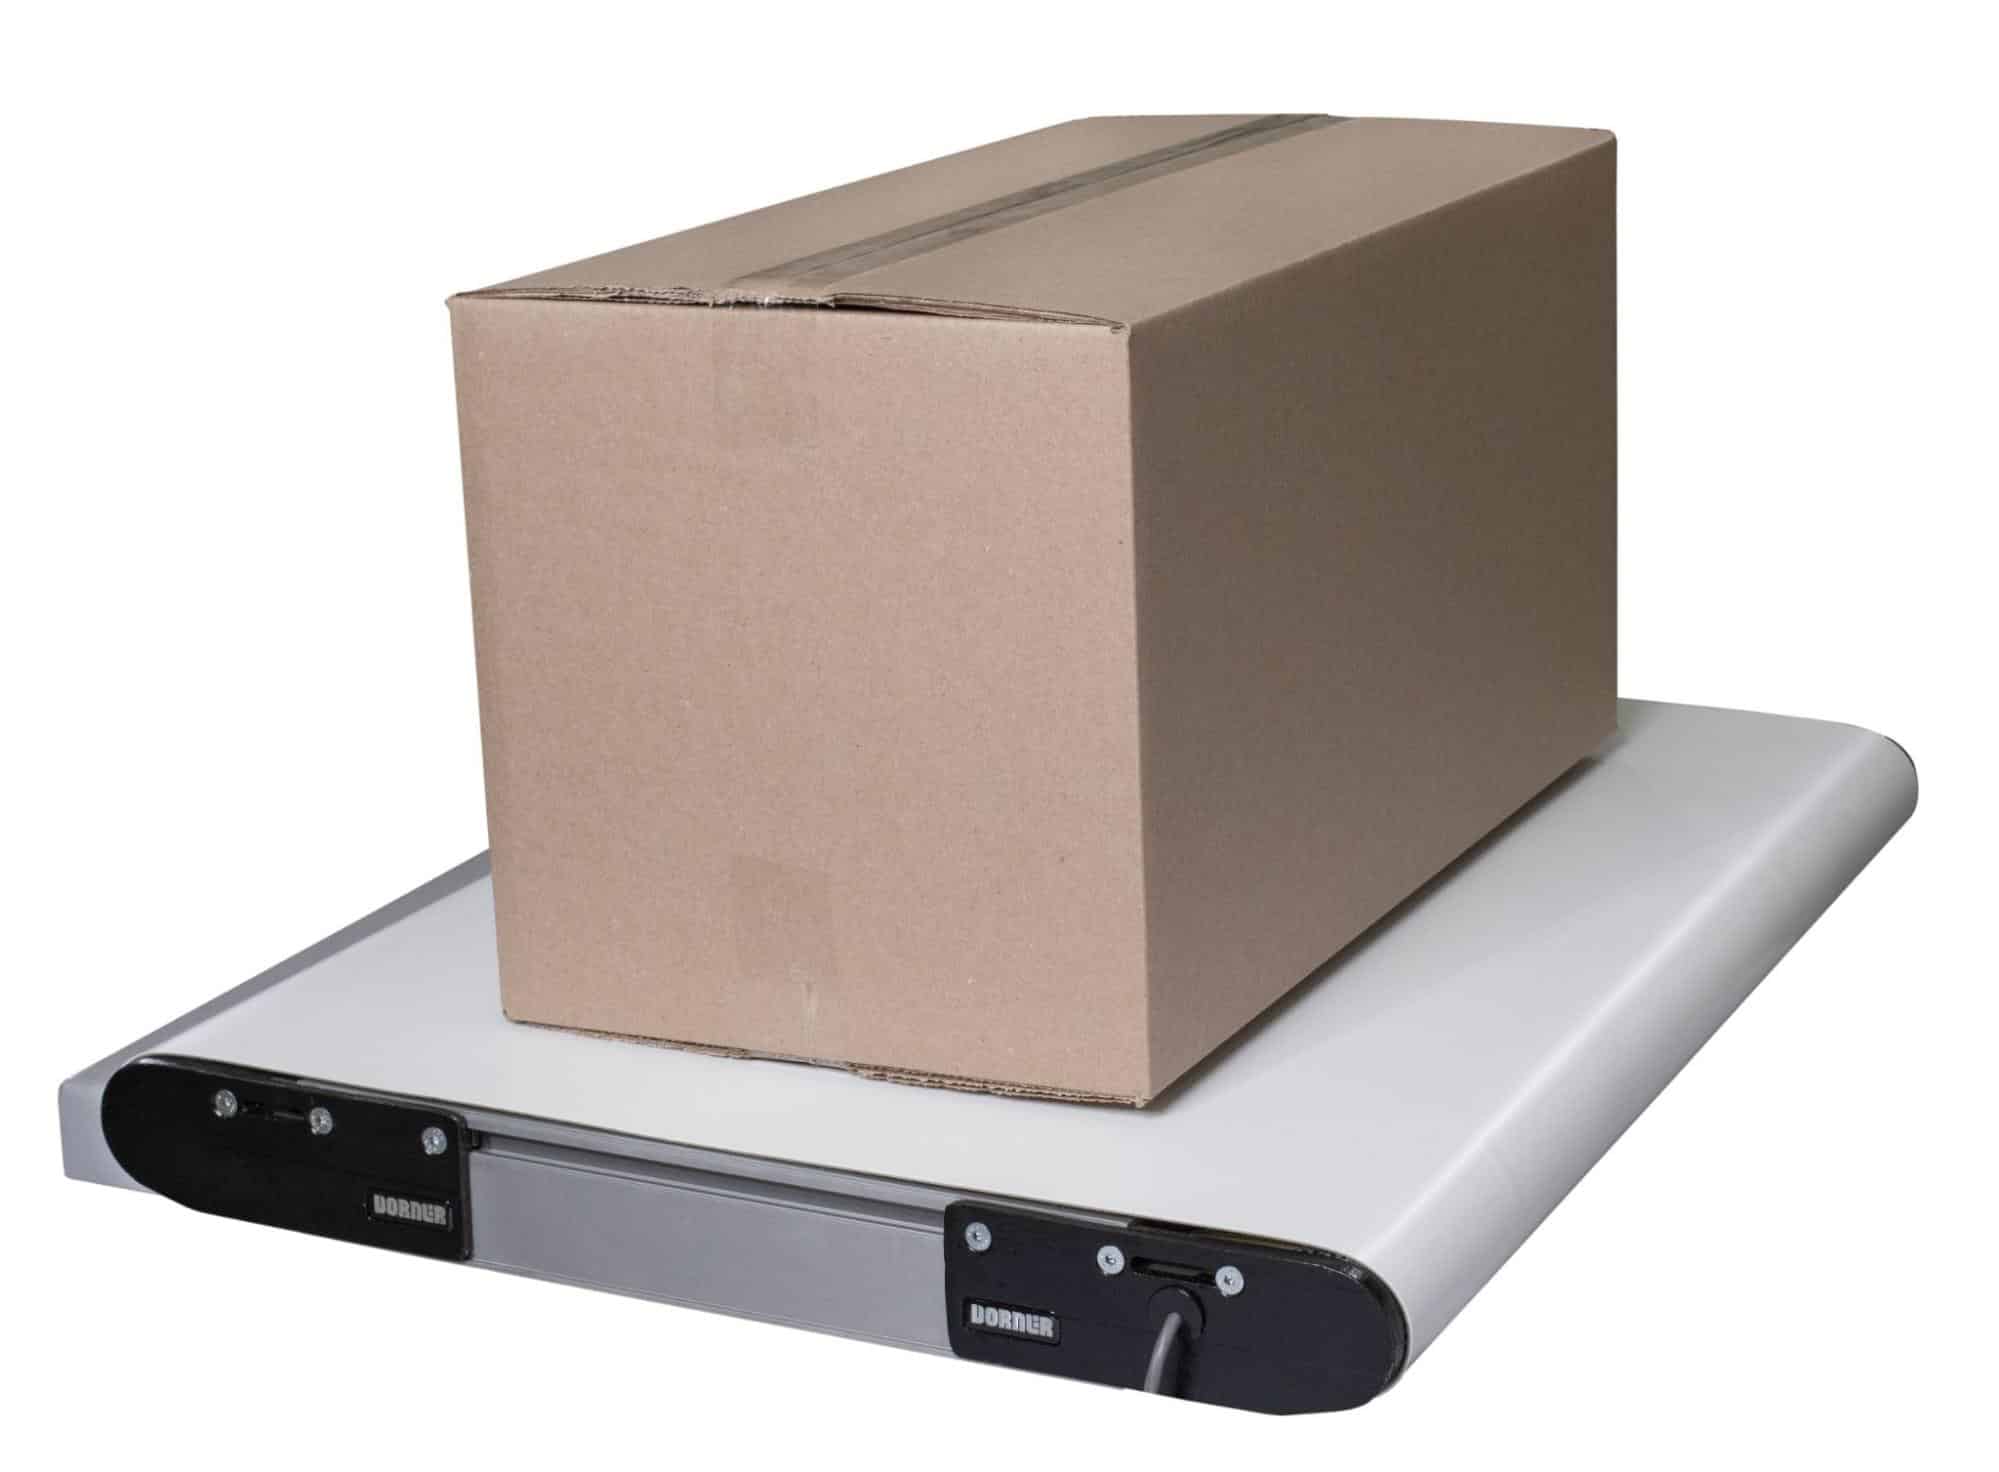 A Dorner AMR Conveyor transporting a cardboard box.